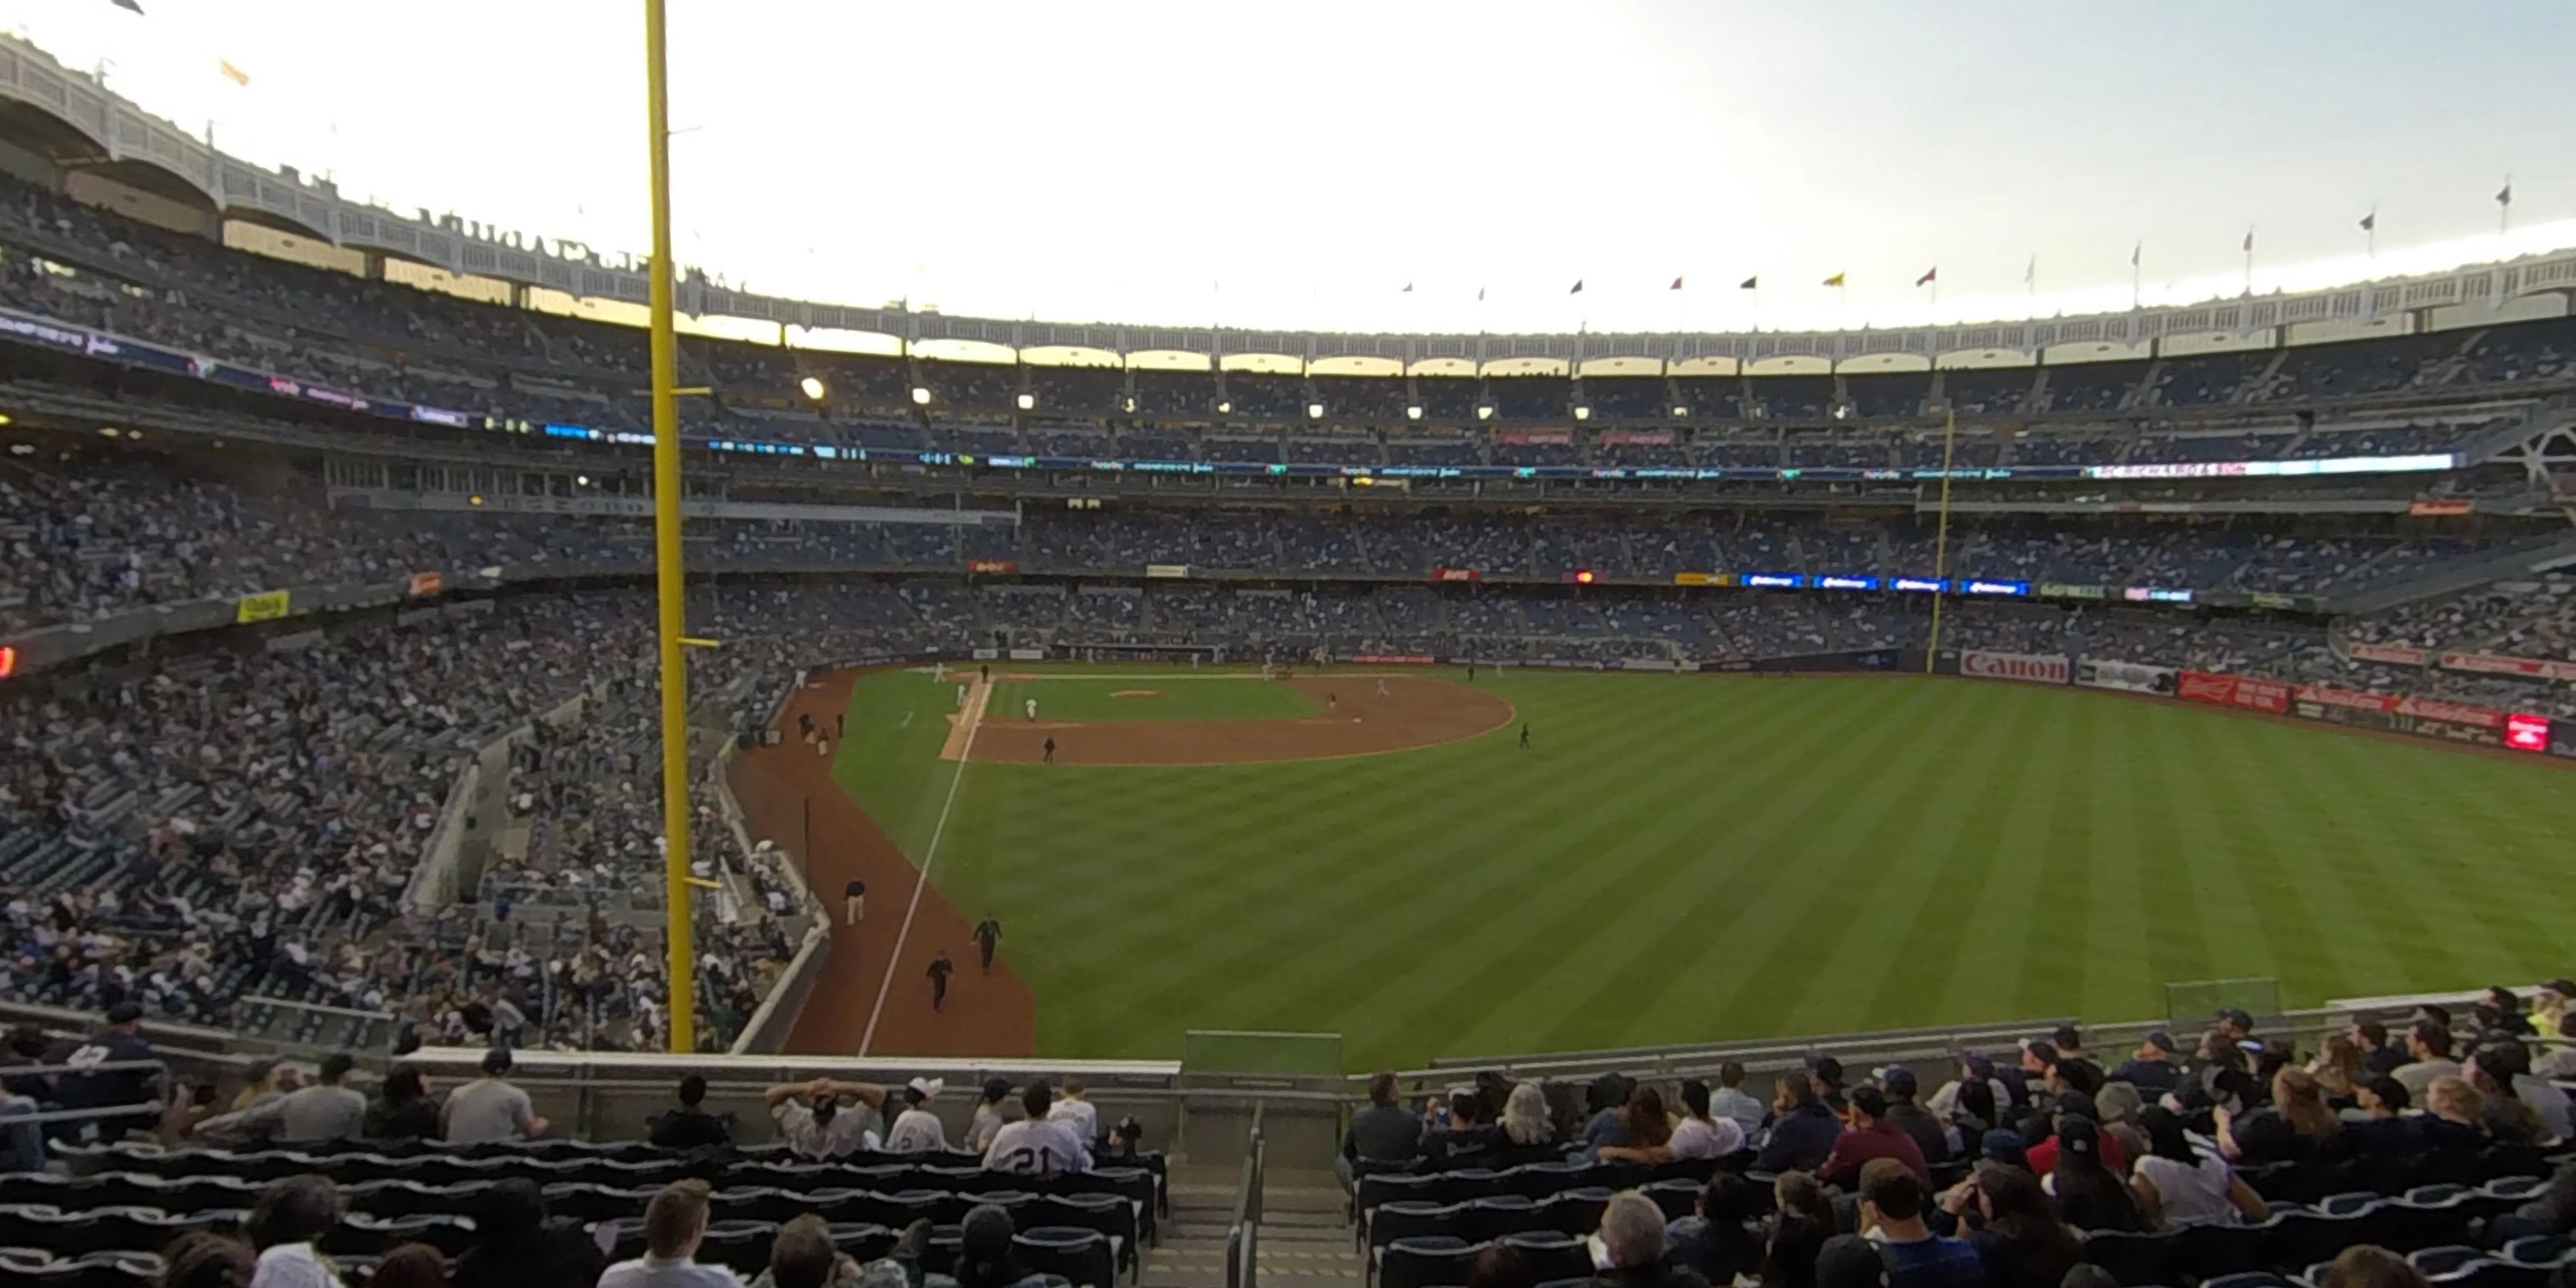 section 206 panoramic seat view  for baseball - yankee stadium